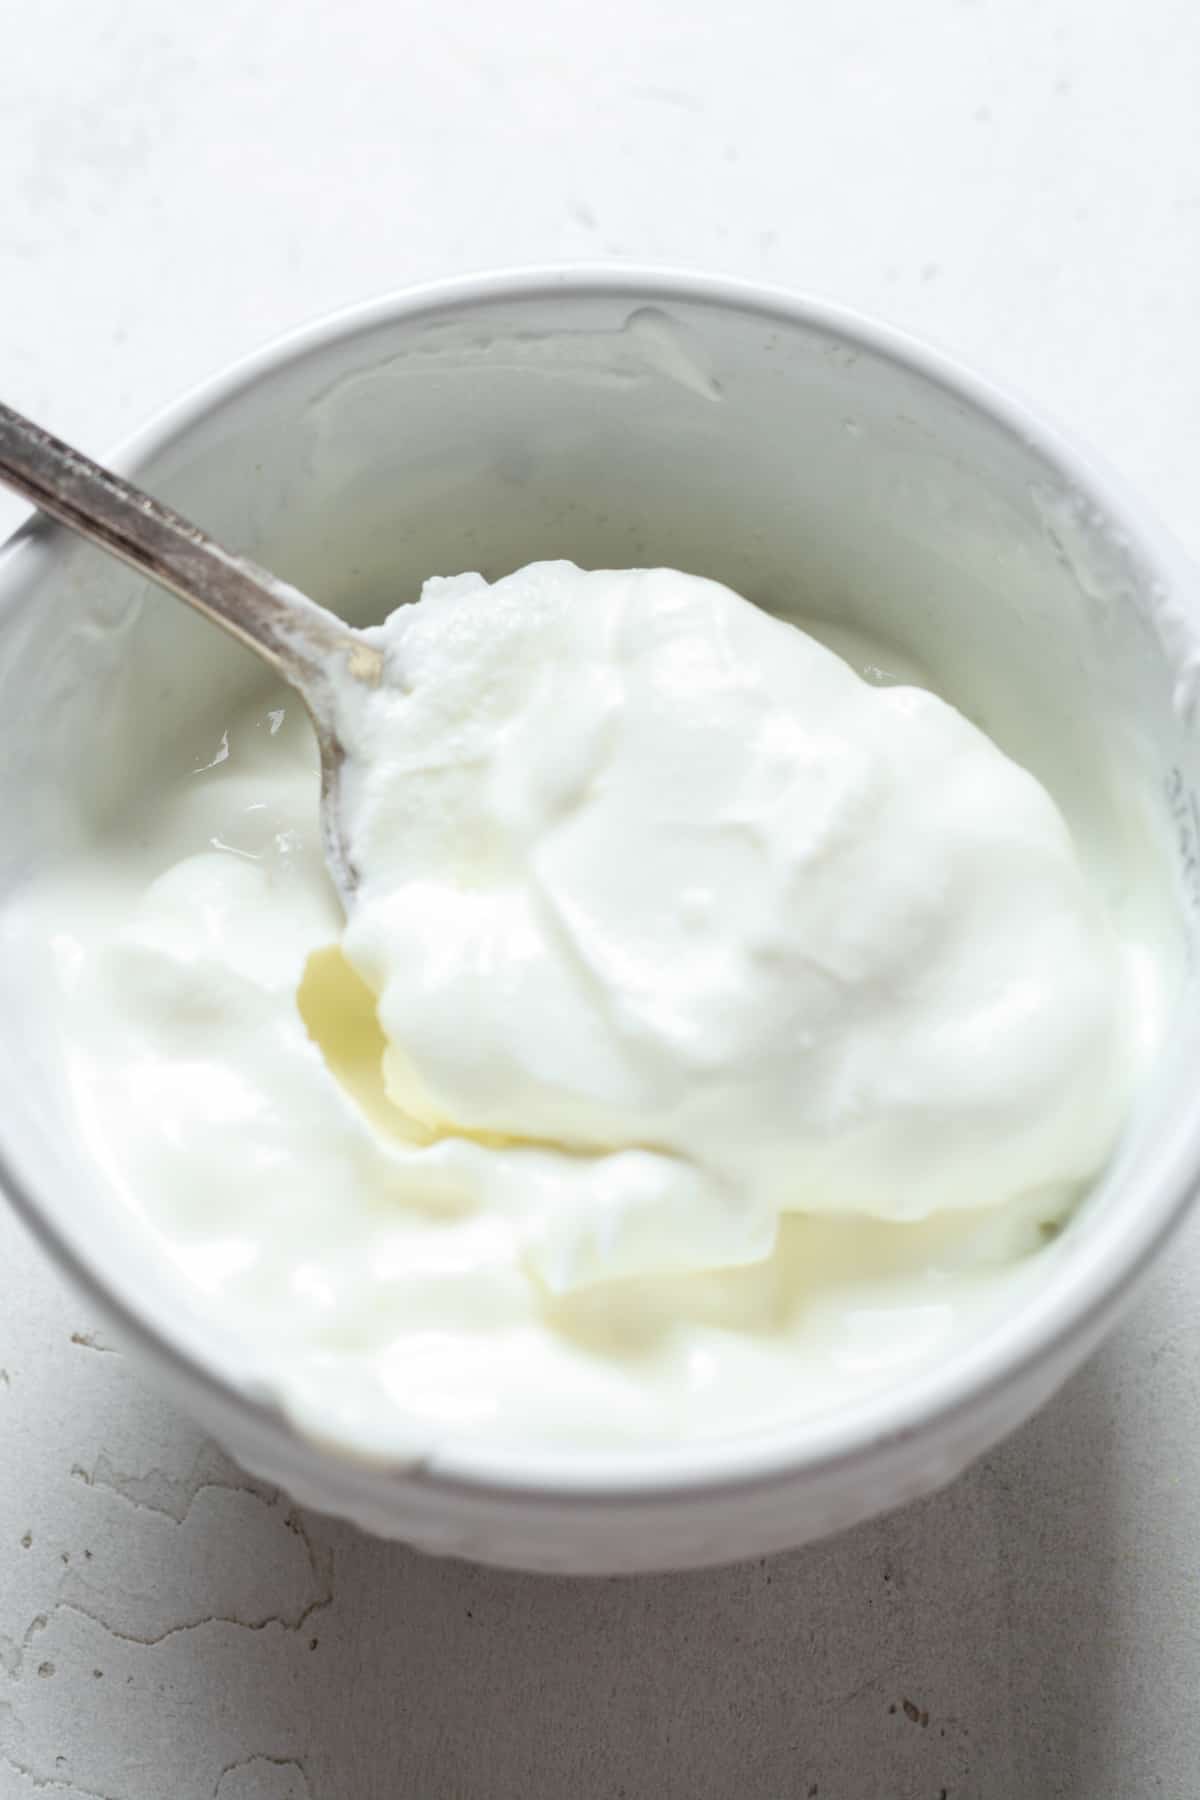 Easy Dairy-Free Sour Cream